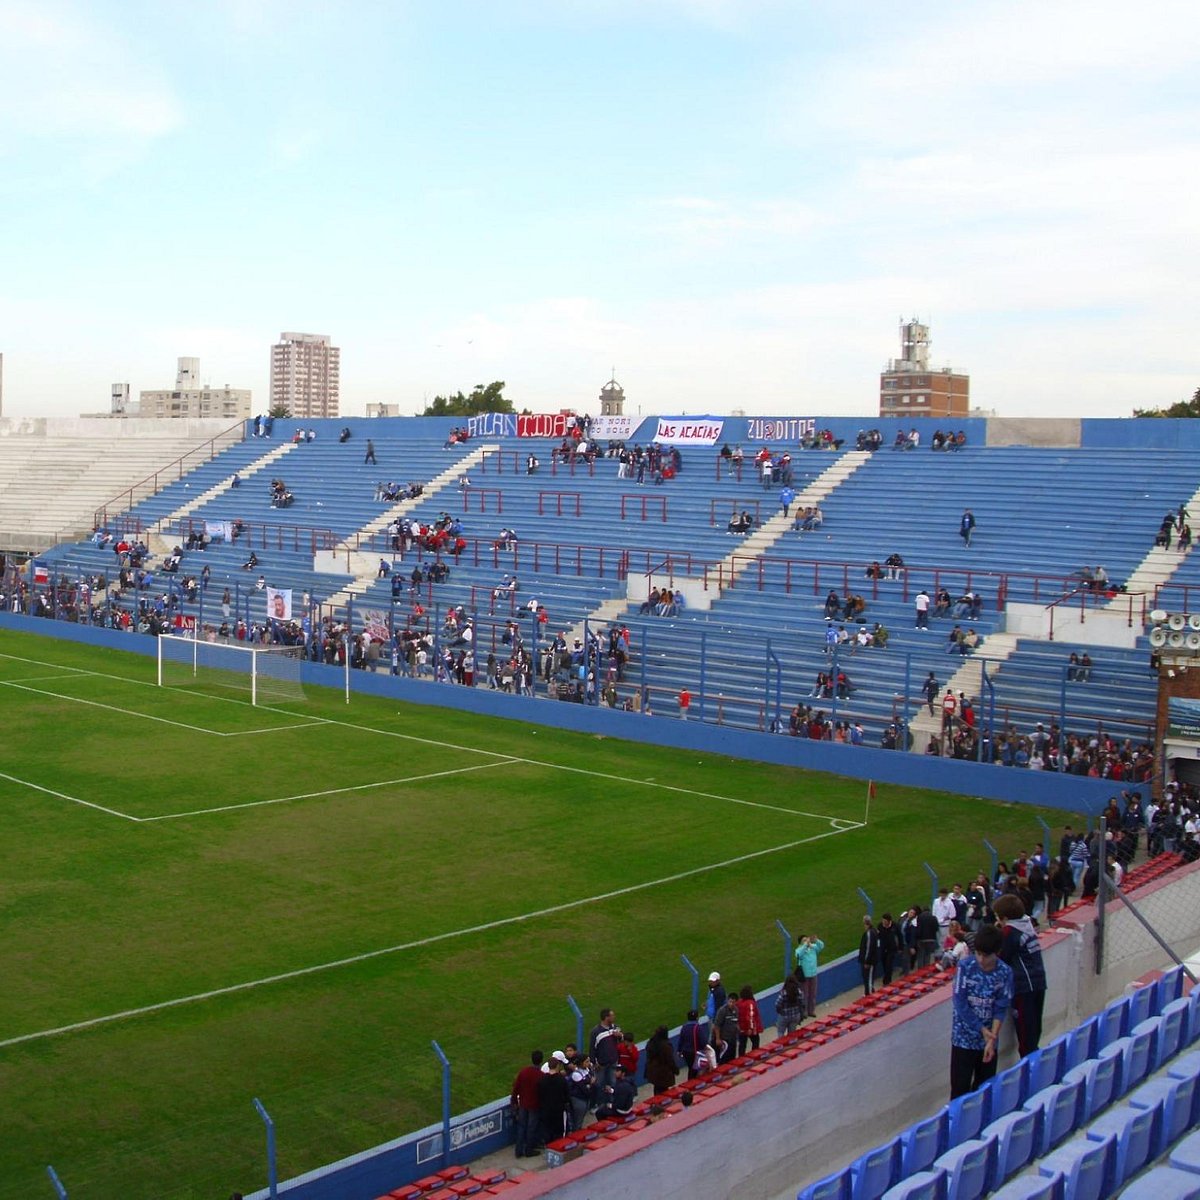 Racing Club De Montevideo, football In Uruguay, National Football